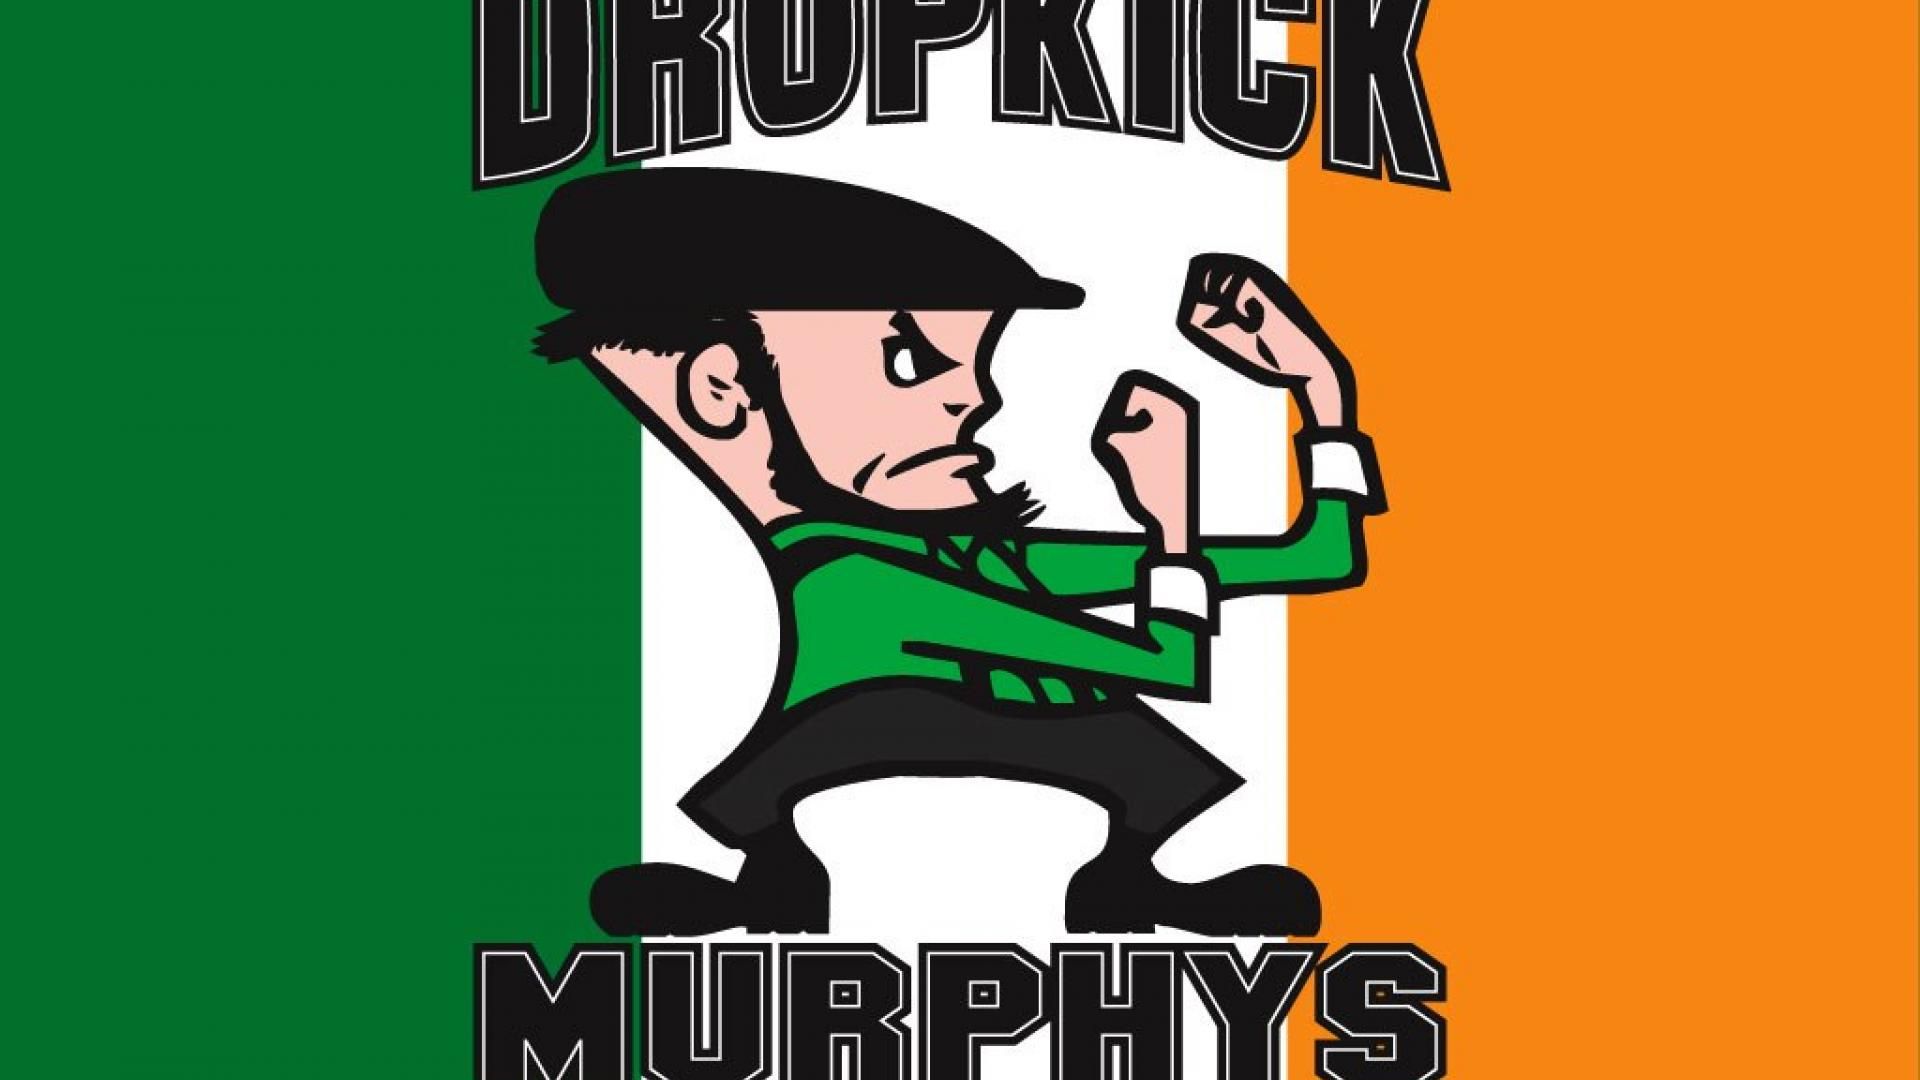 Dropkick murphys official hd wallpaper - HQ Desktop